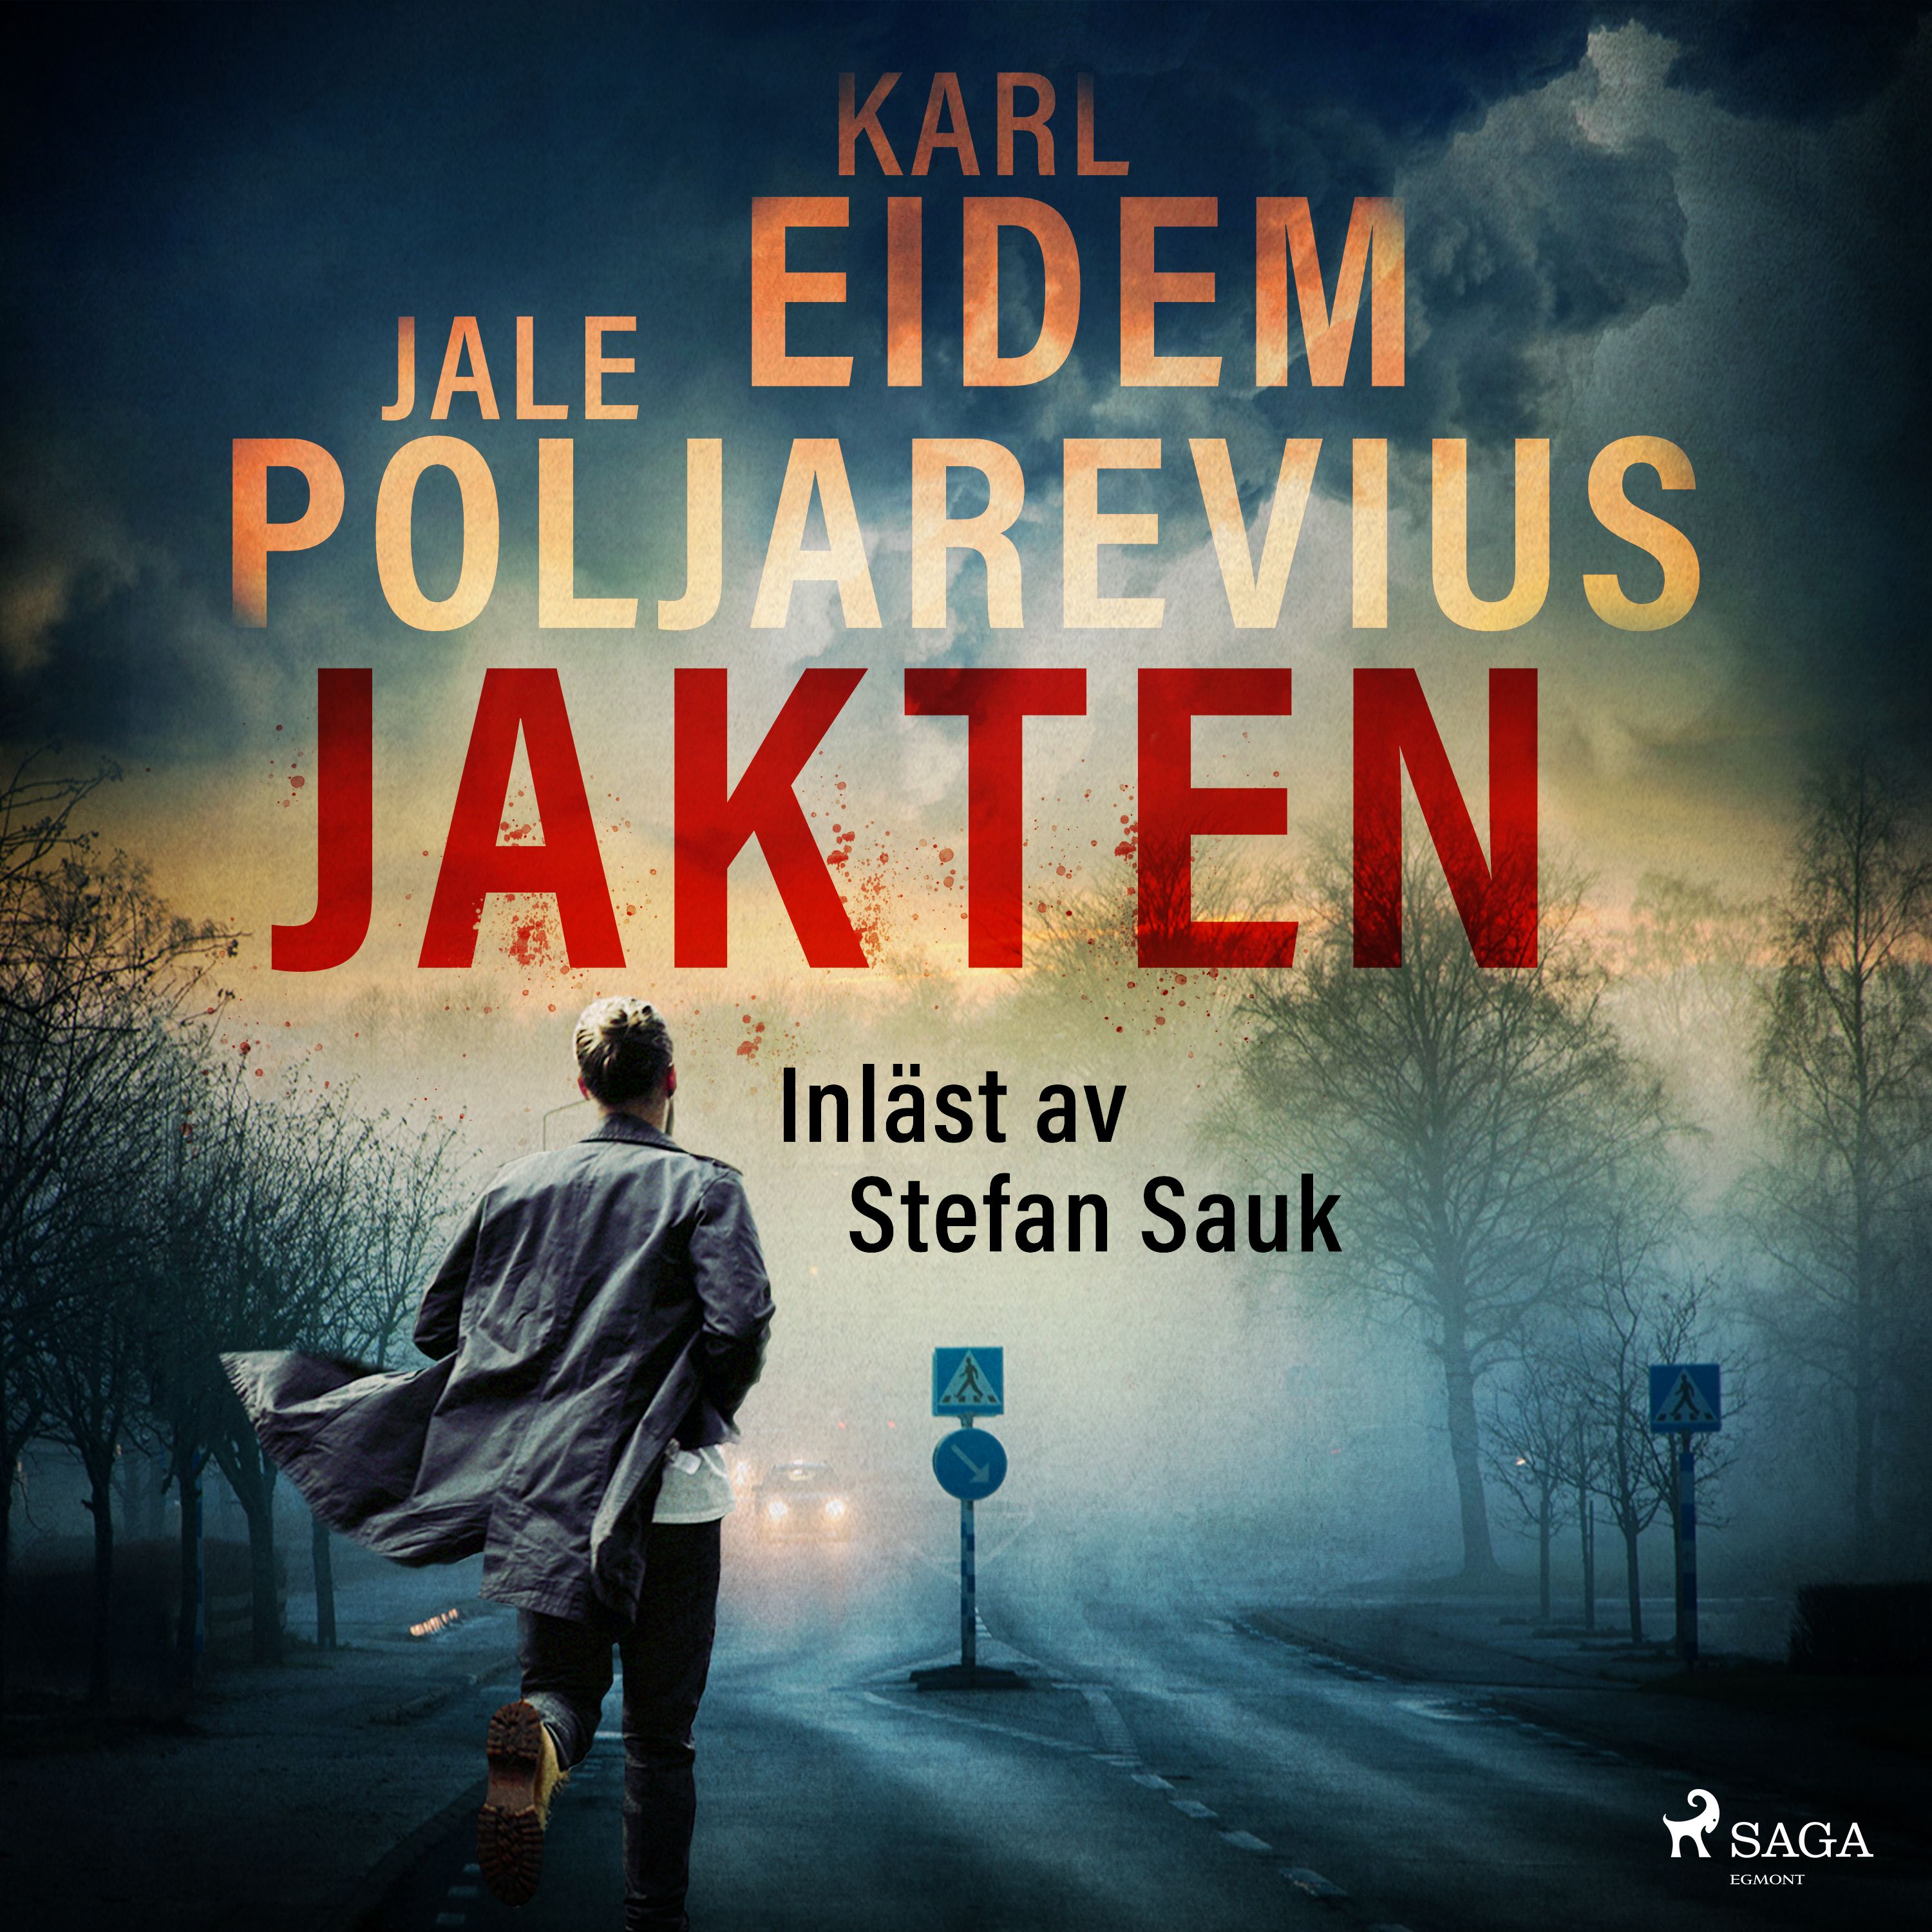 Jakten, audiobook by Karl Eidem, Jale Poljarevius